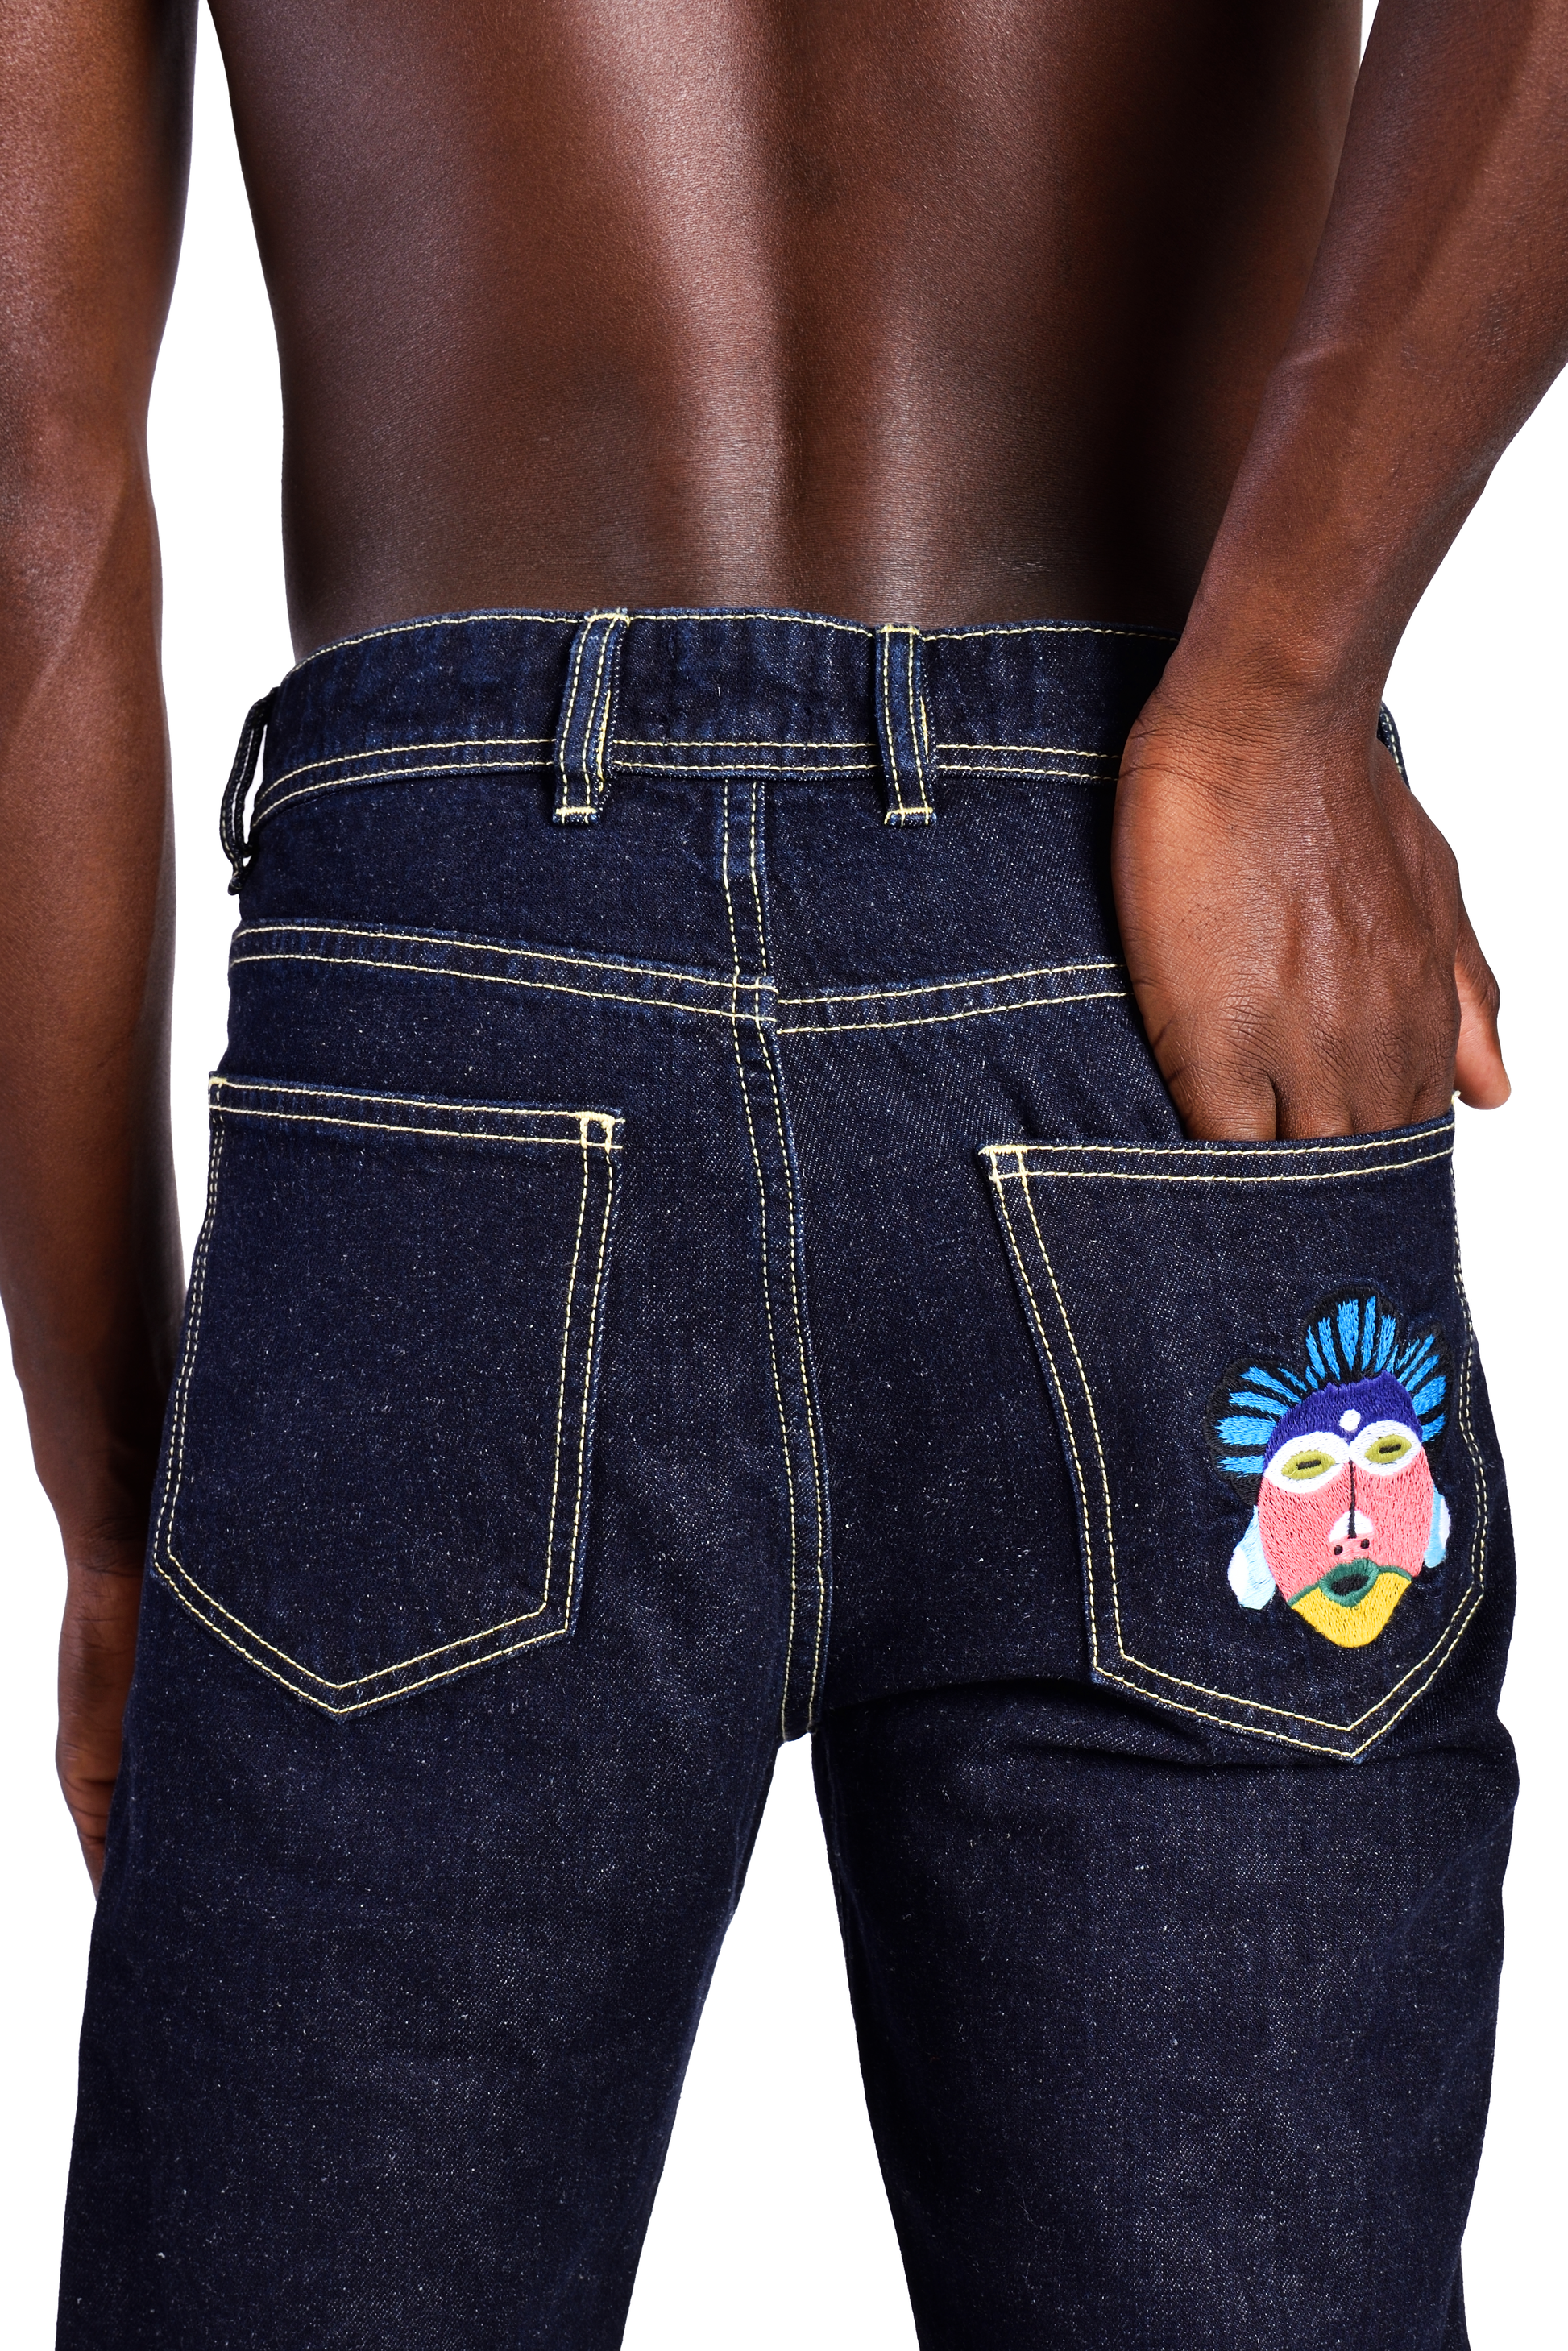 jeans-dagga-venezia-denim-canapa-dettaglio